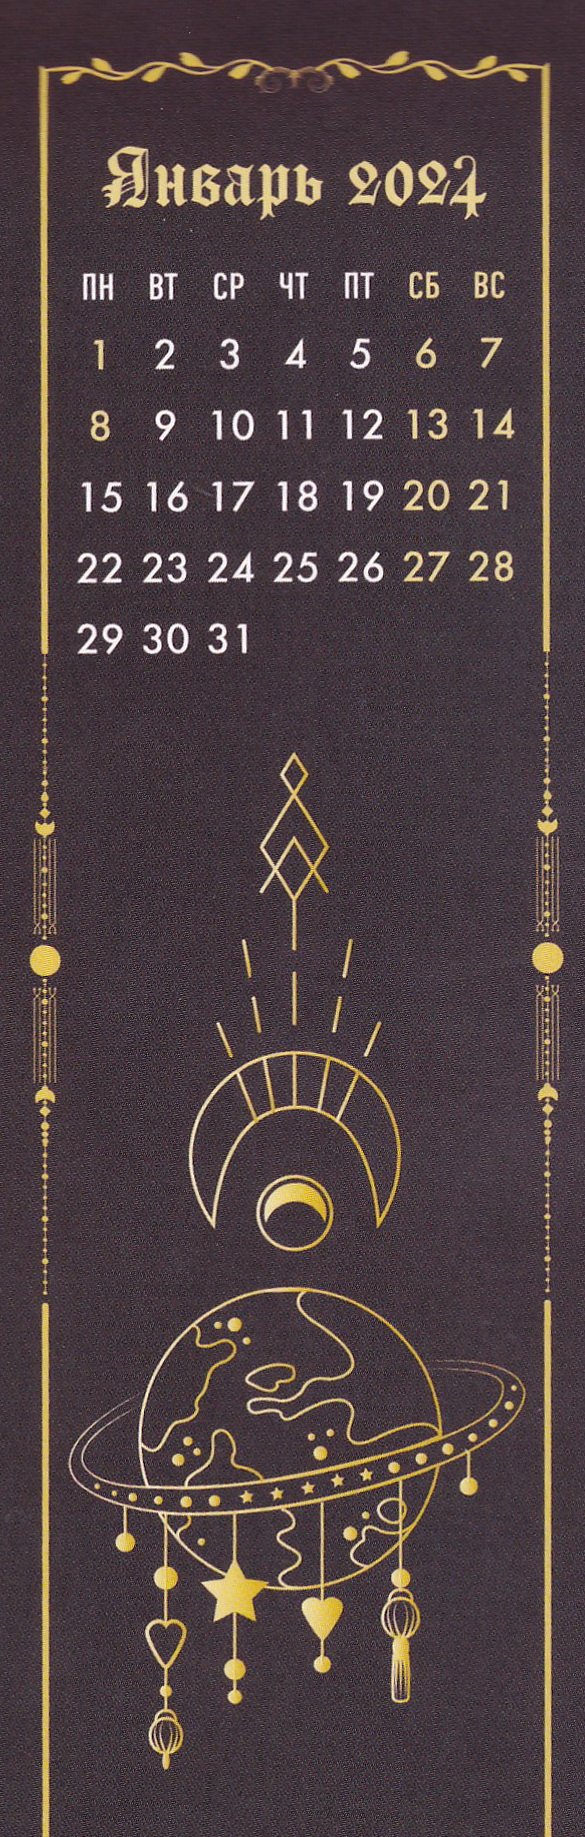 Witch spirit. Календари-закладки на 2024 год (12 шт., на перфорации), Witch spirit